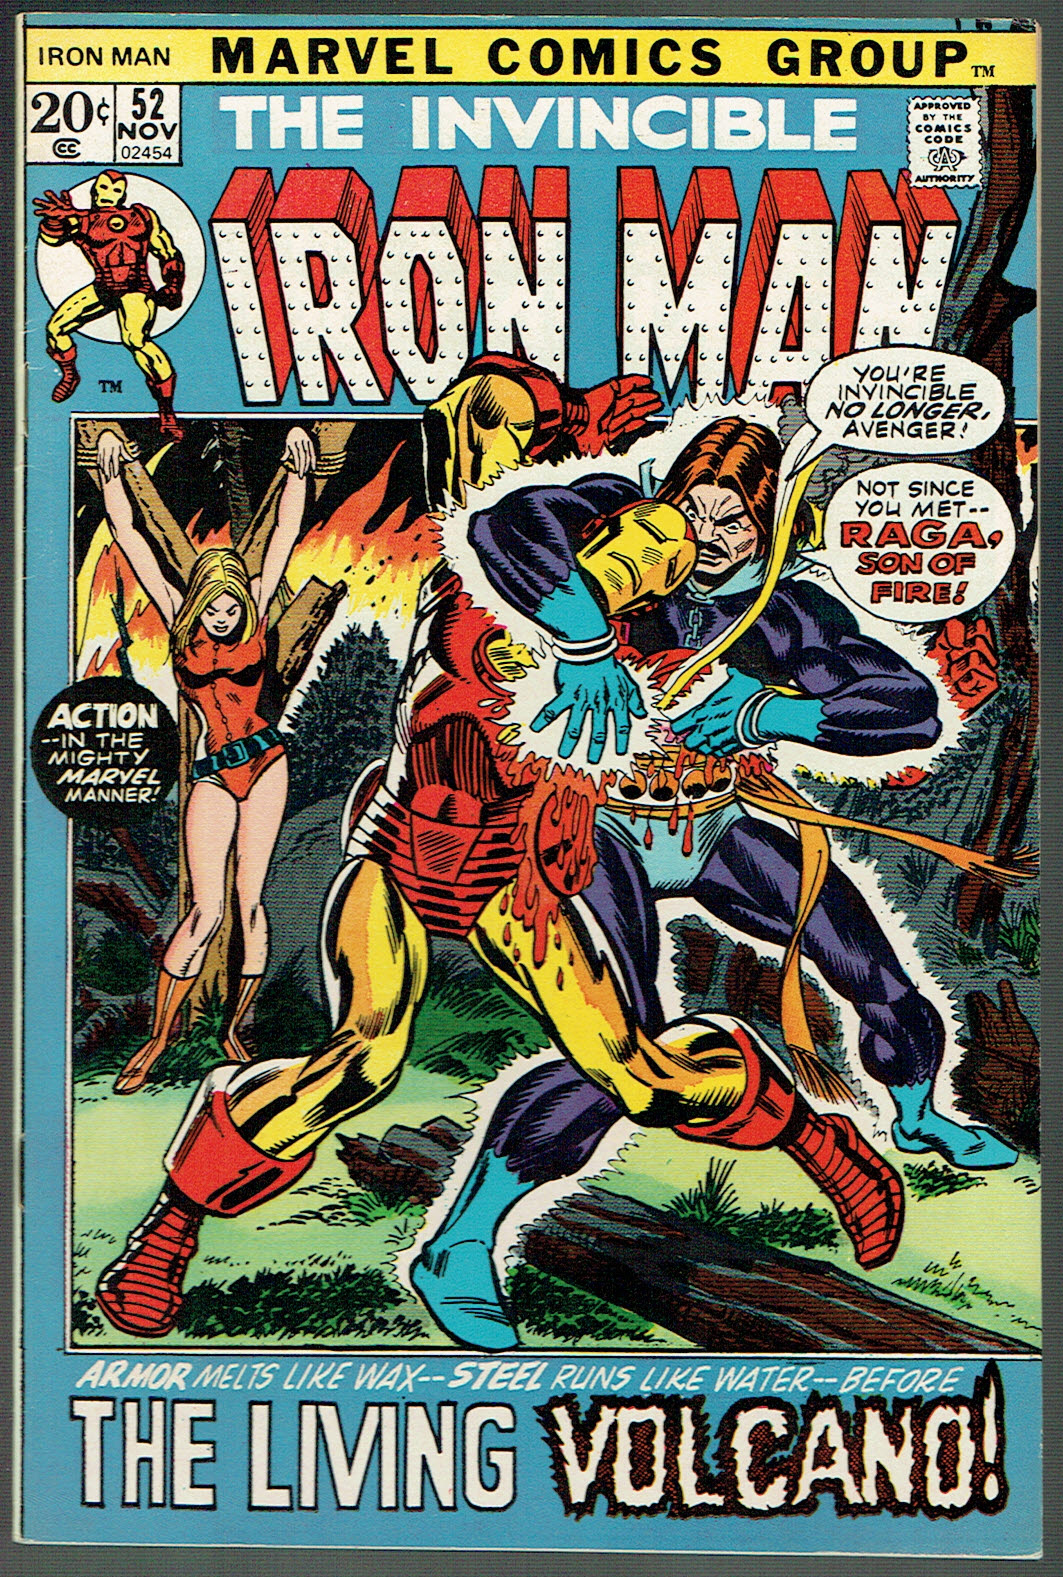 Iron Man  #52